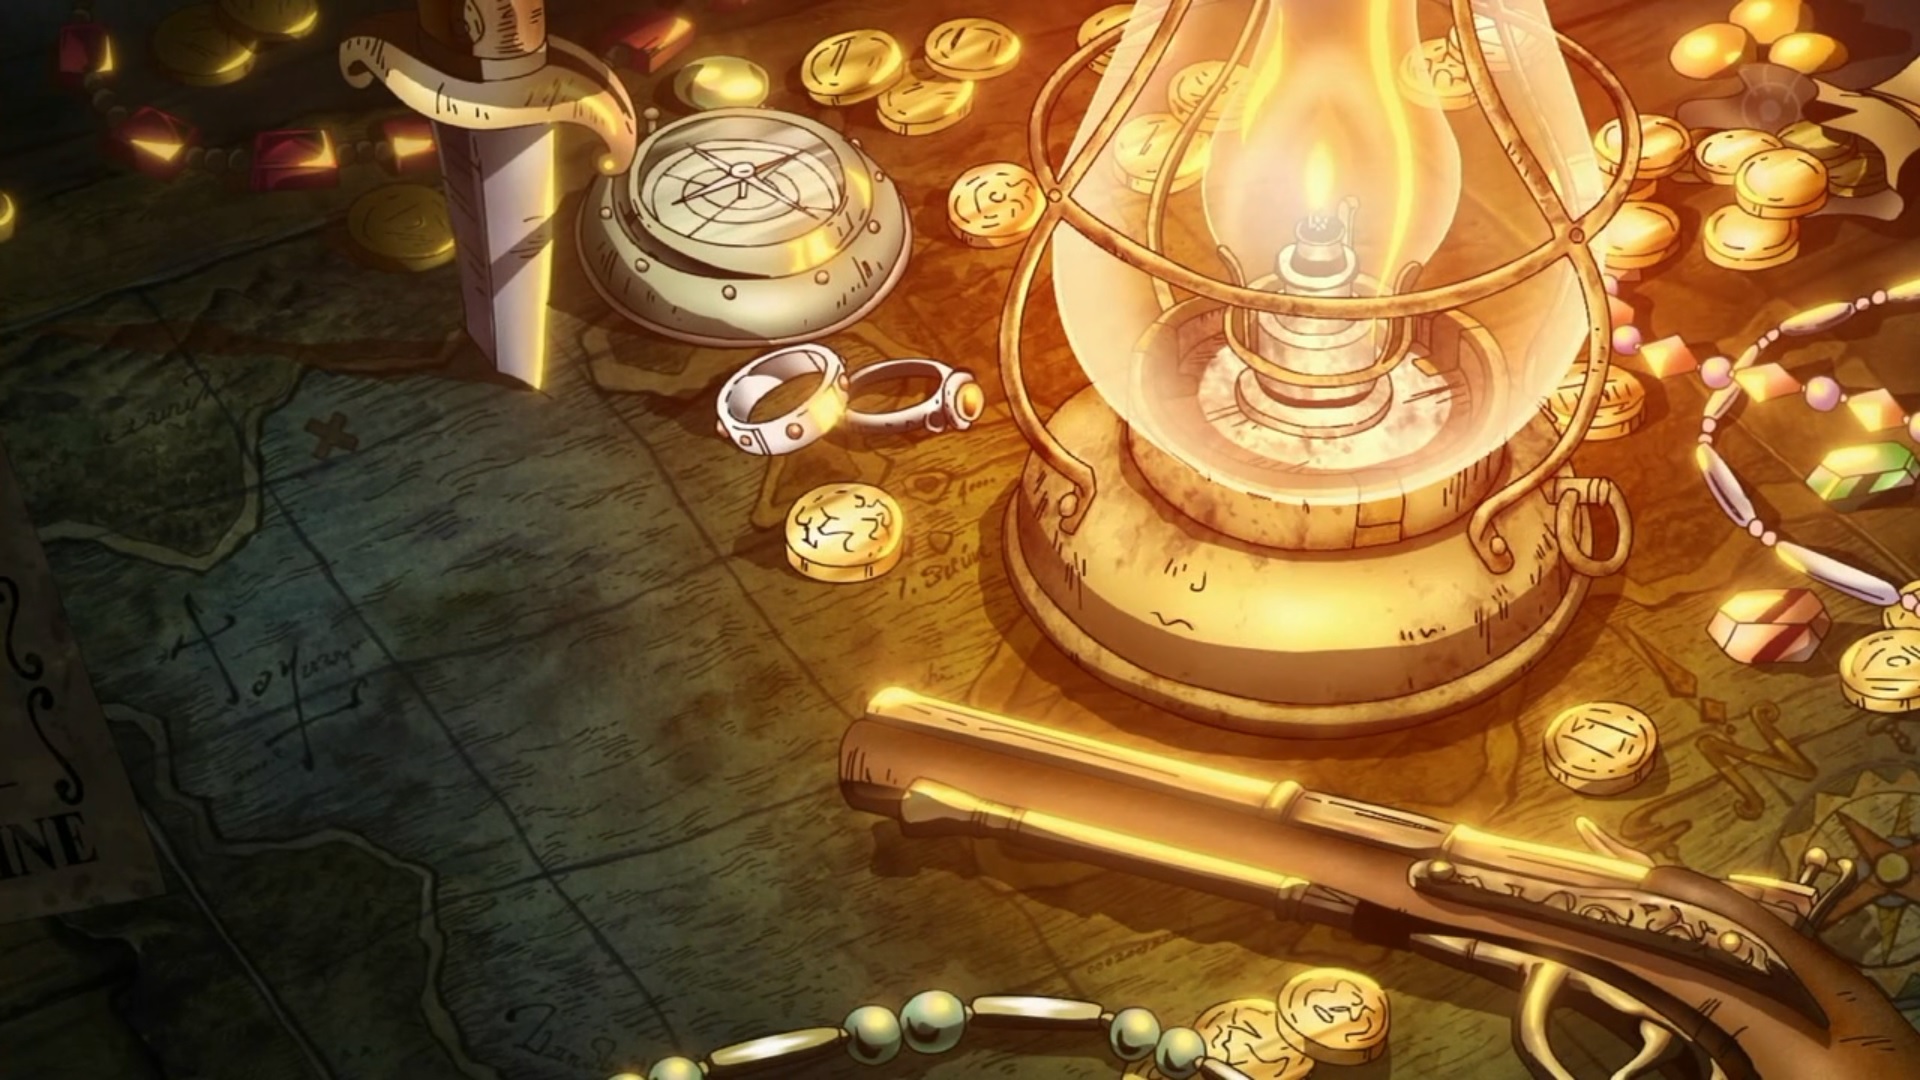 Anime 1920x1080 One Piece treasure gold lamp gun anime lantern coins compass rings weapon map